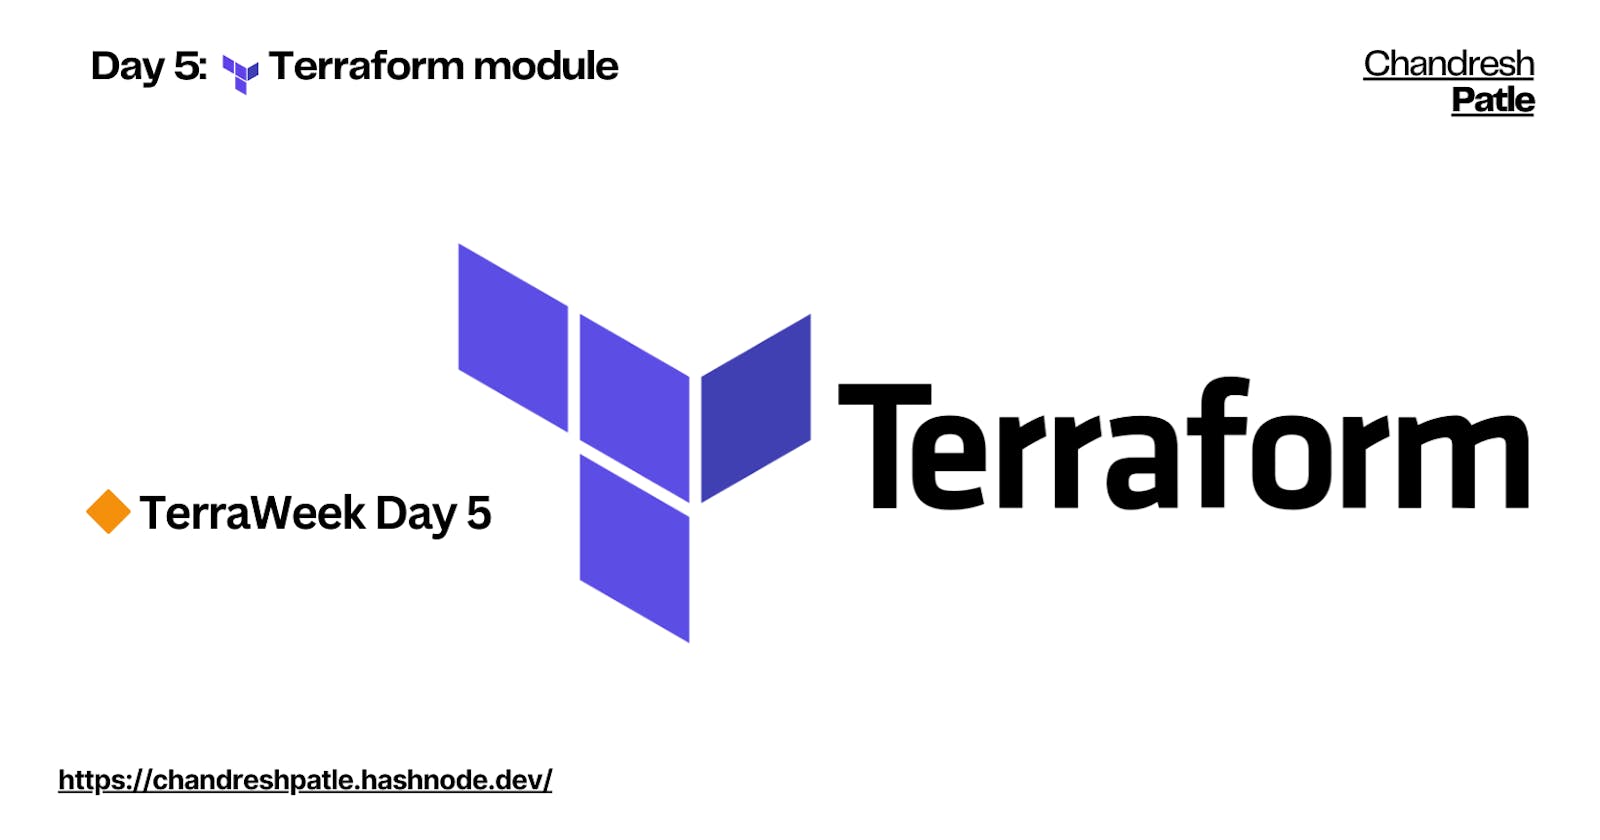 Day 5: Terraform module